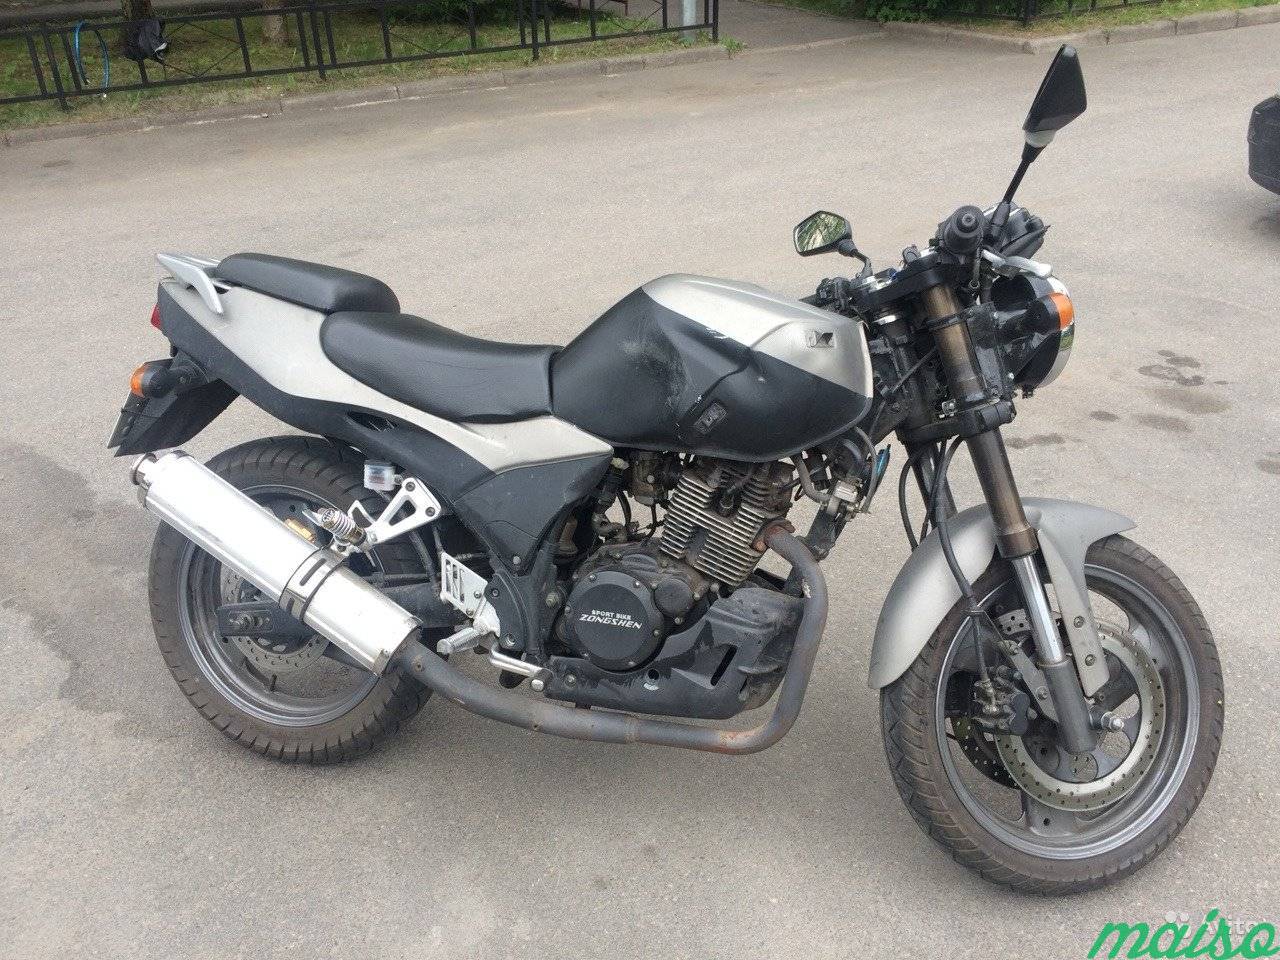 Zongshen мотоцикл zs250gs-3a производства chongqing zongshen motorcycle industry co., ltd. (мото китай)